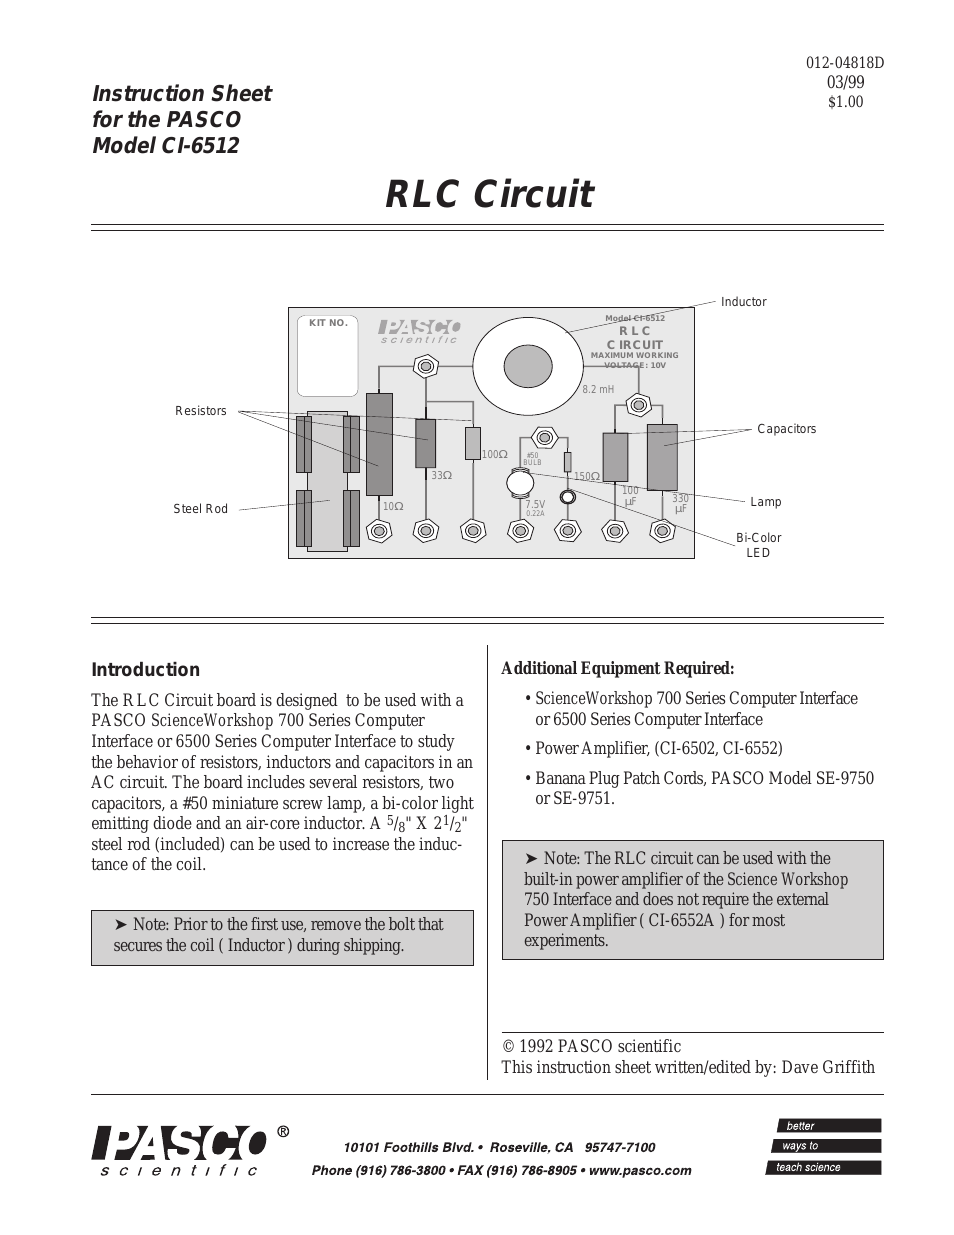 CI-6512 RLC Circuit